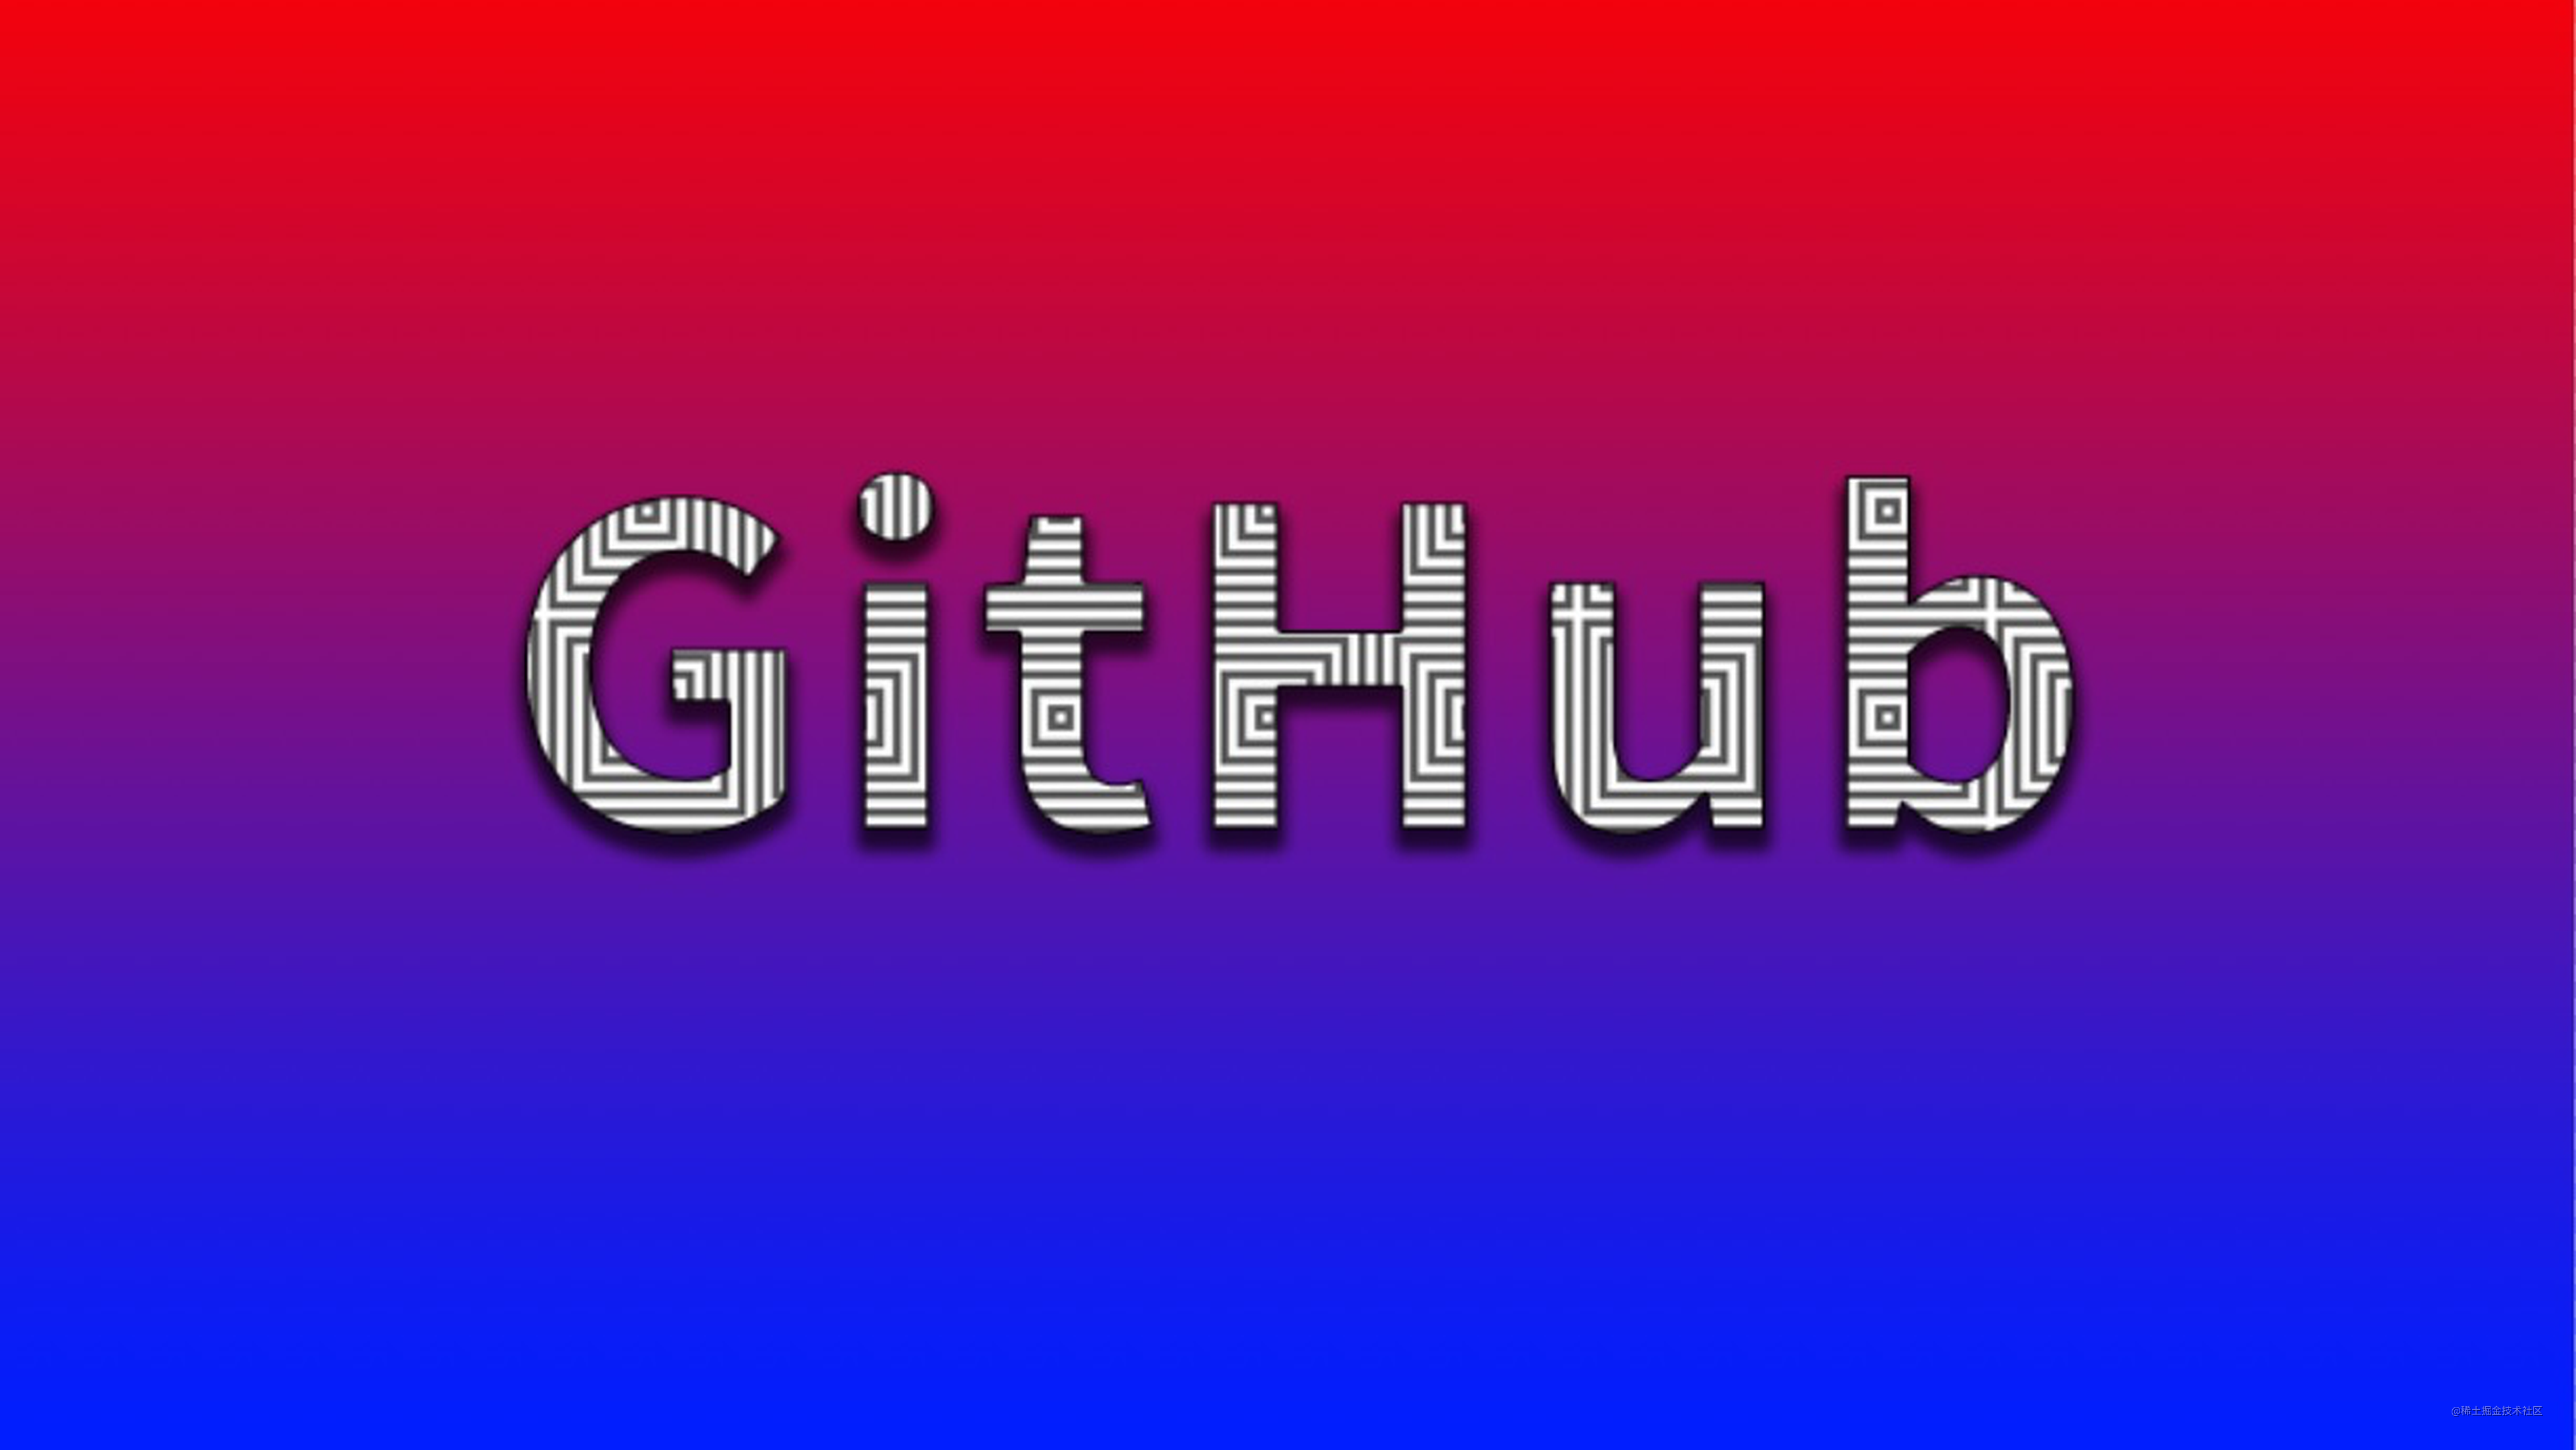 GitHub 标星 1.6w+，我发现了一个宝藏项目，作为编程新手有福了！